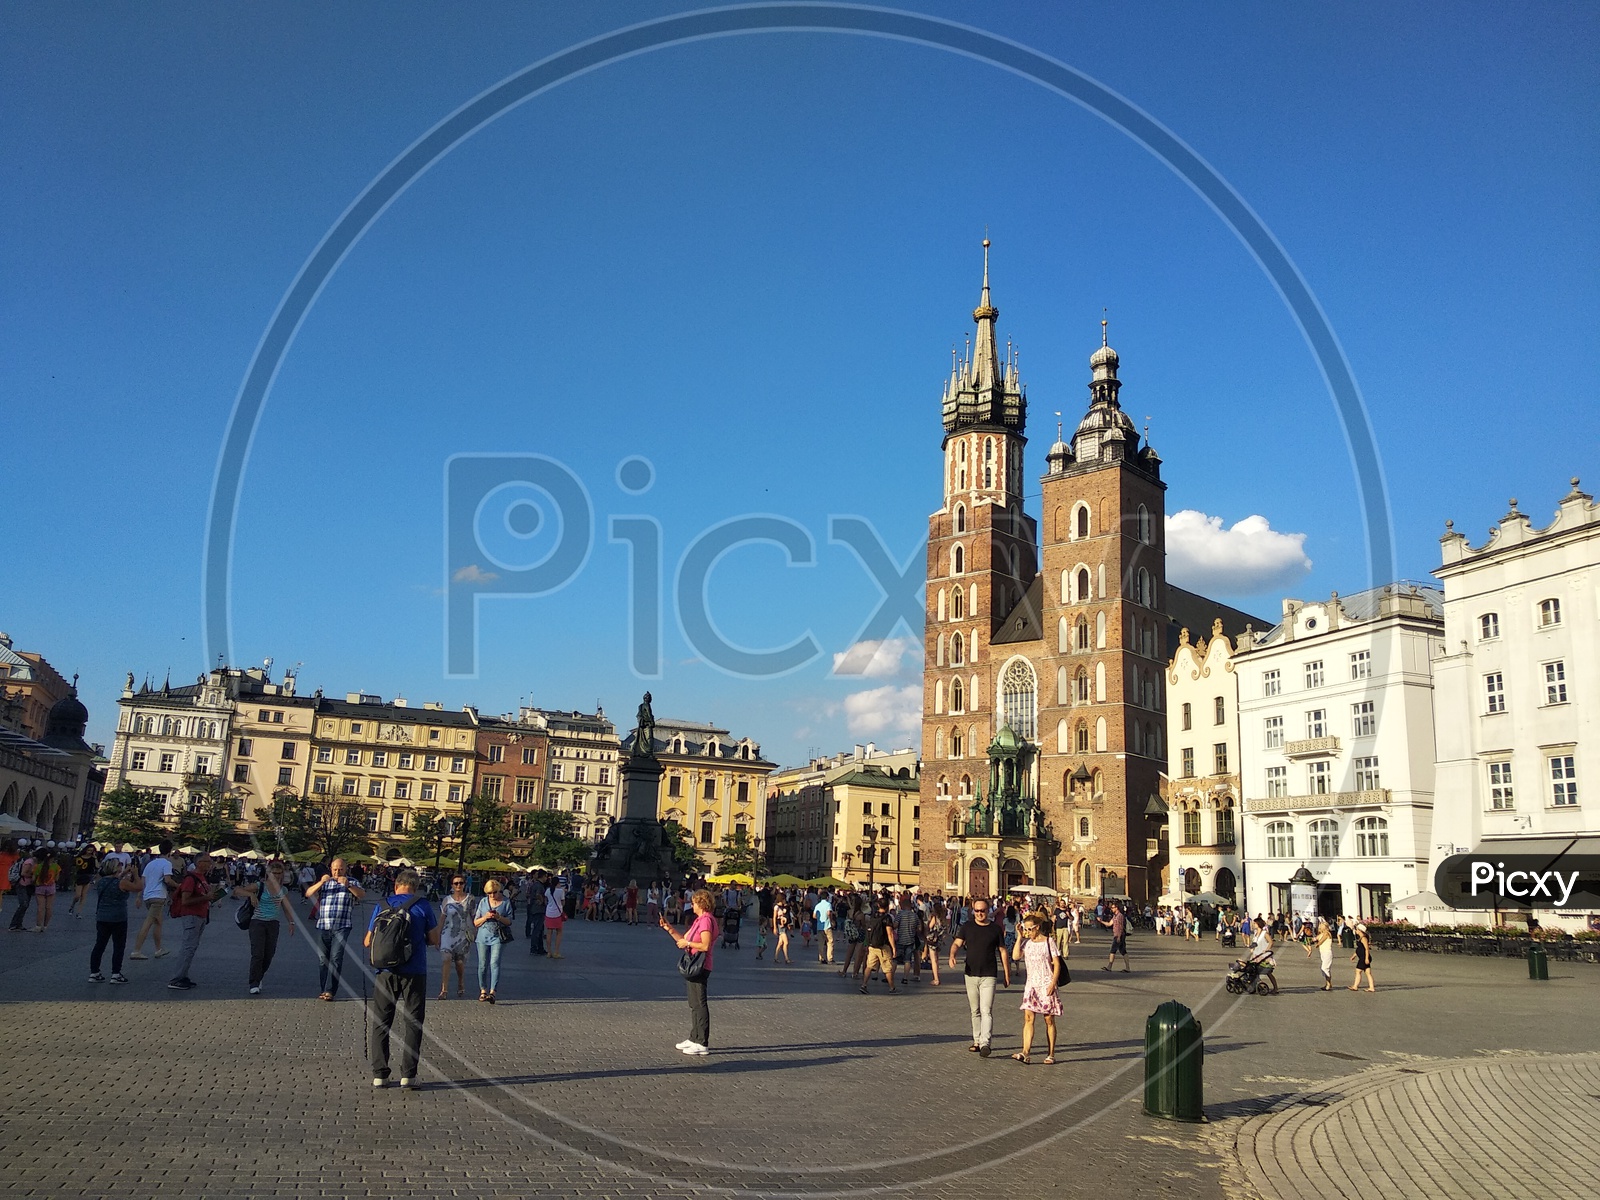 Krakow market Square